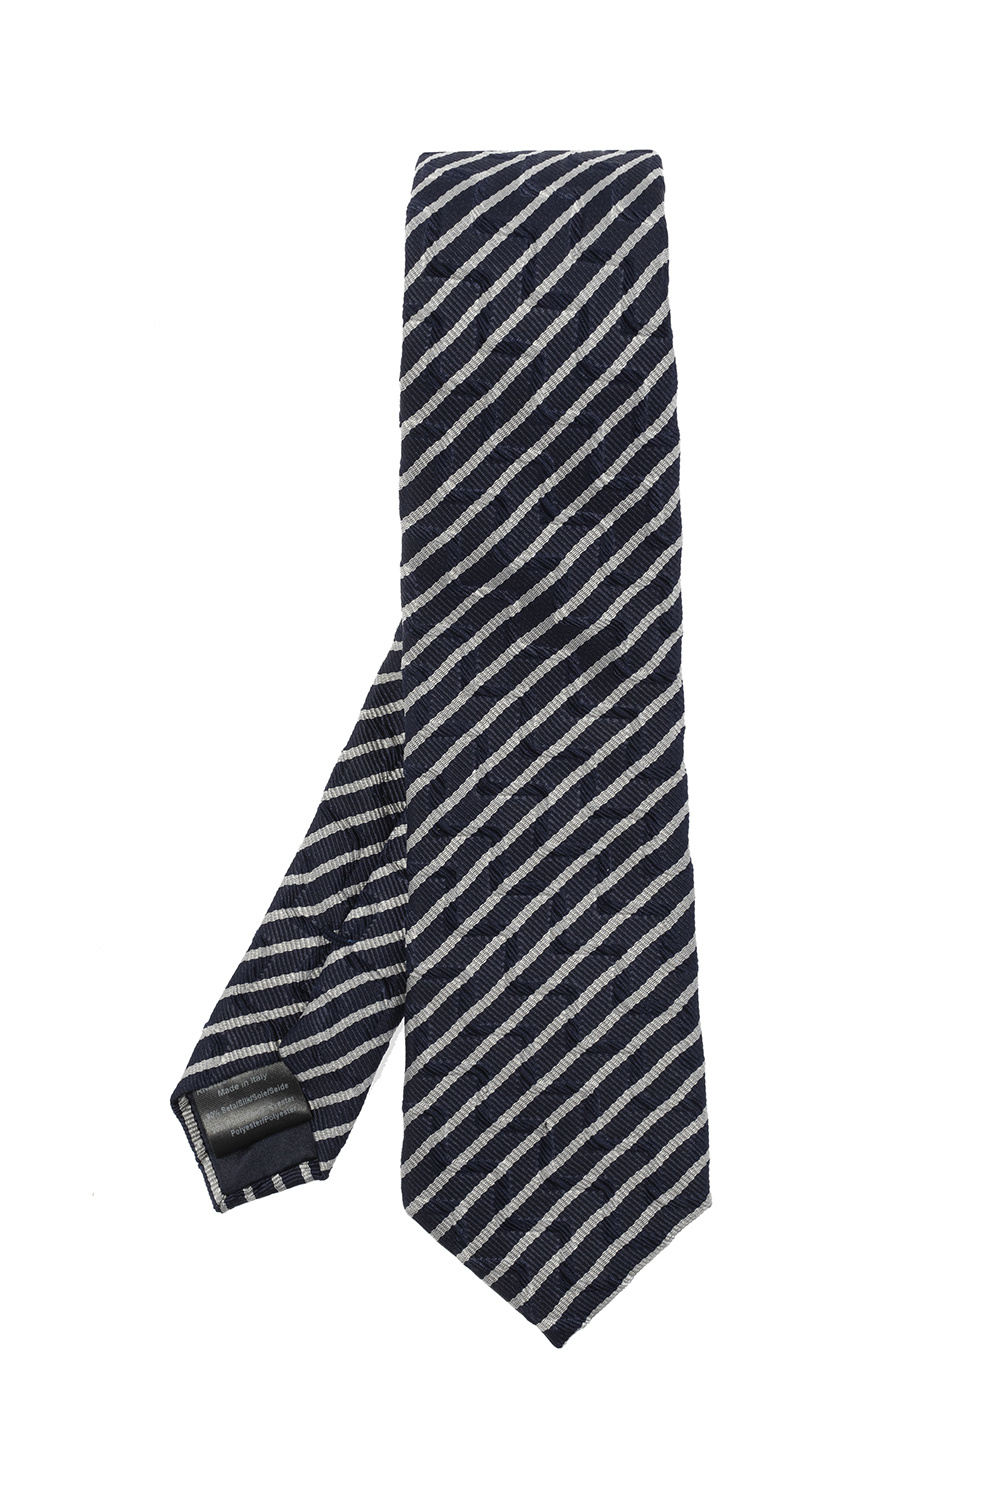 Giorgio Armani Greyd tie